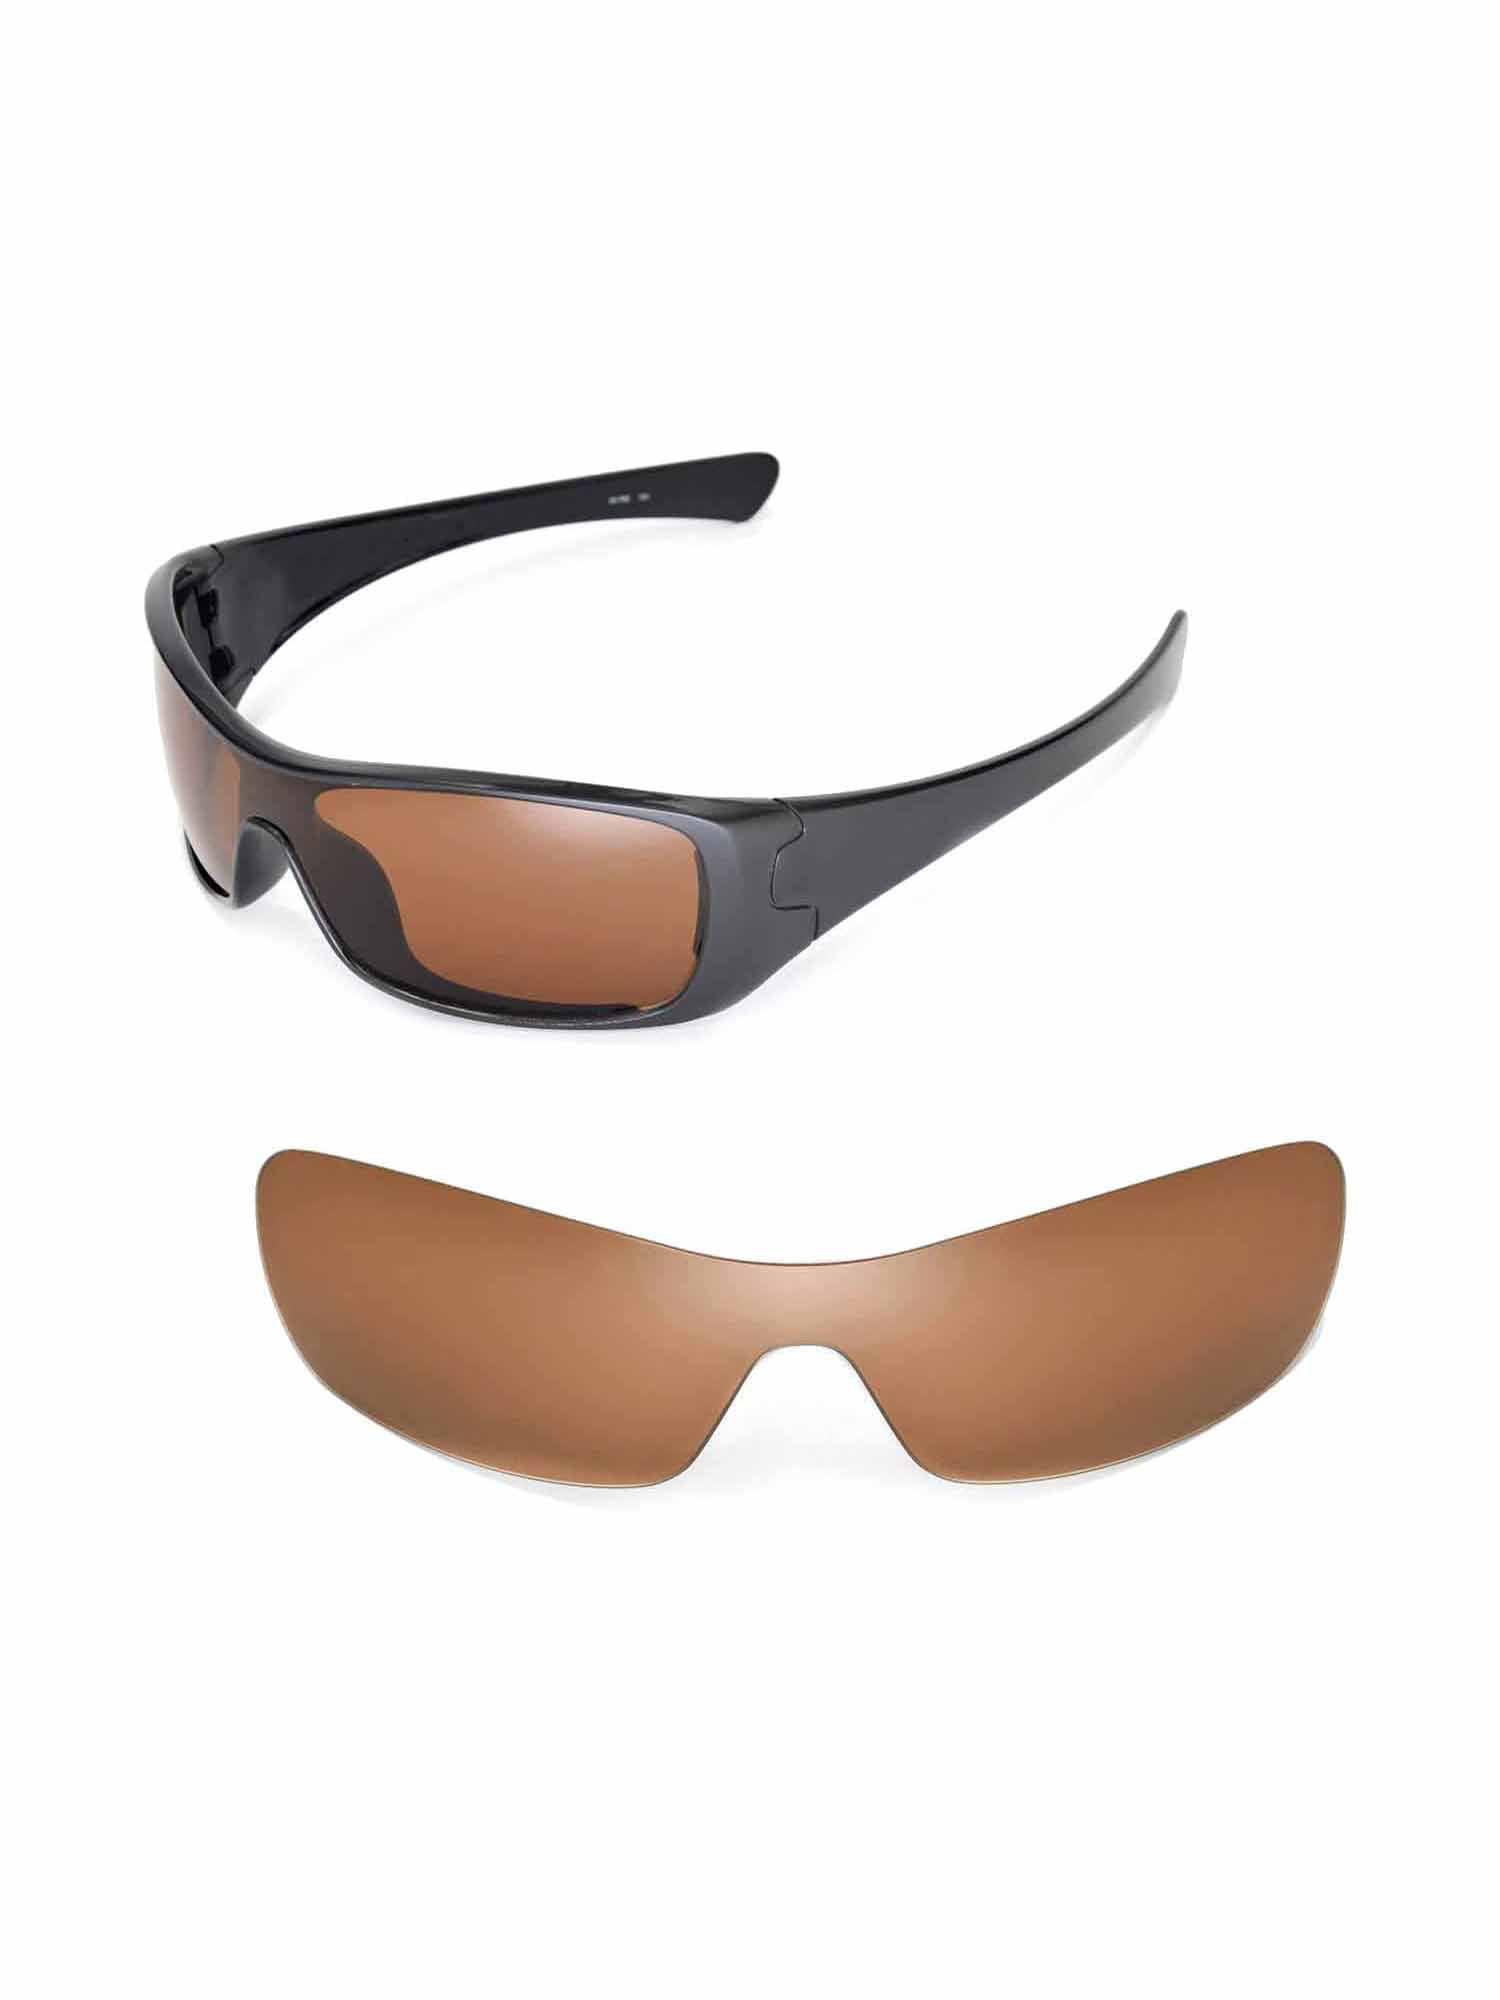 Walleva Polarized Replacement Lenses for Oakley Antix Sunglasses